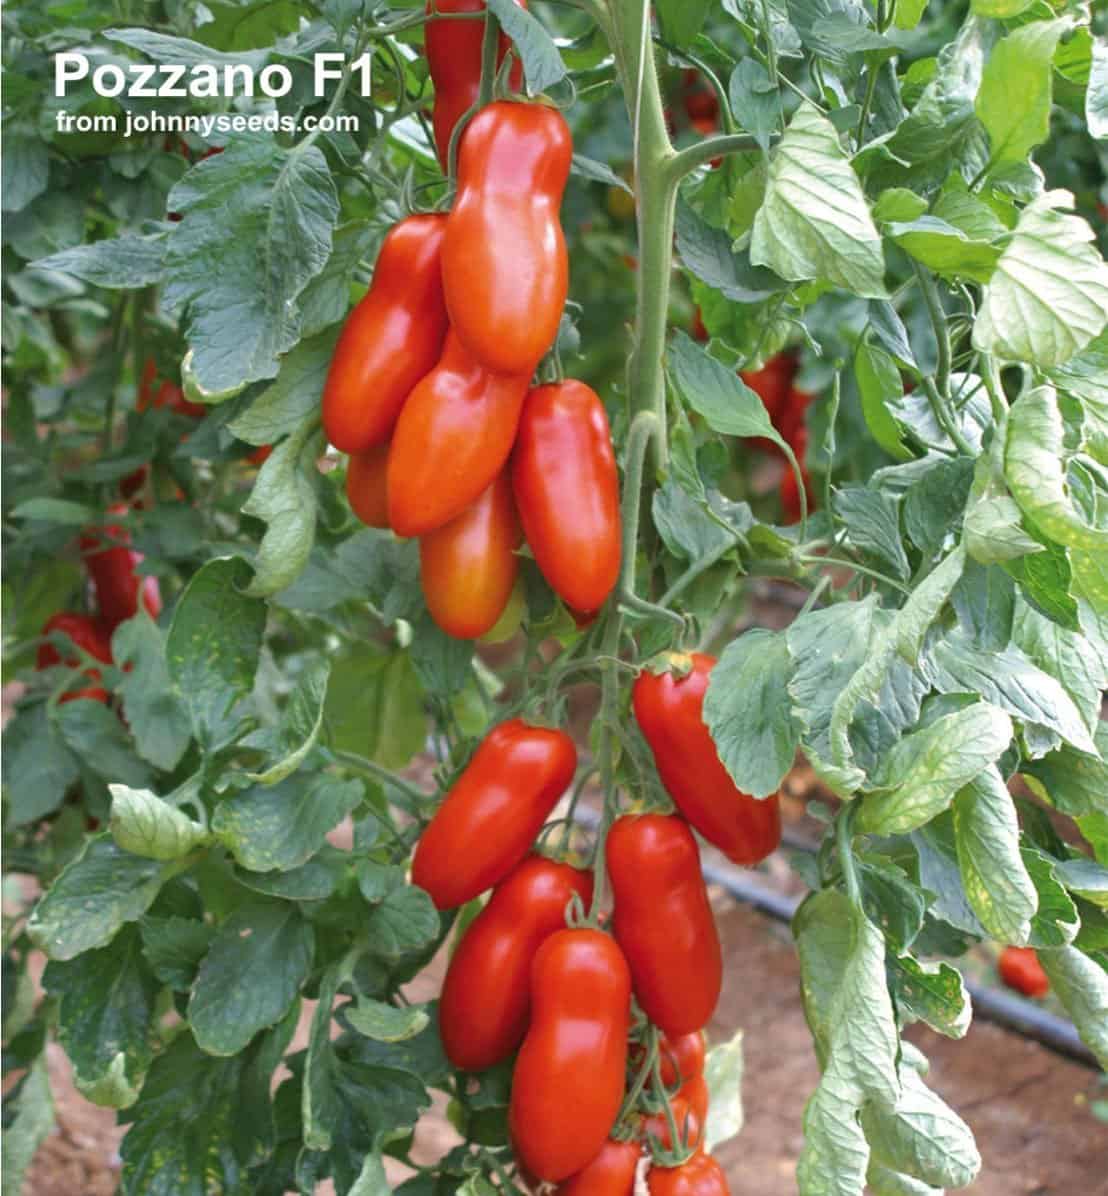 pozzano tomatoes growing on vine